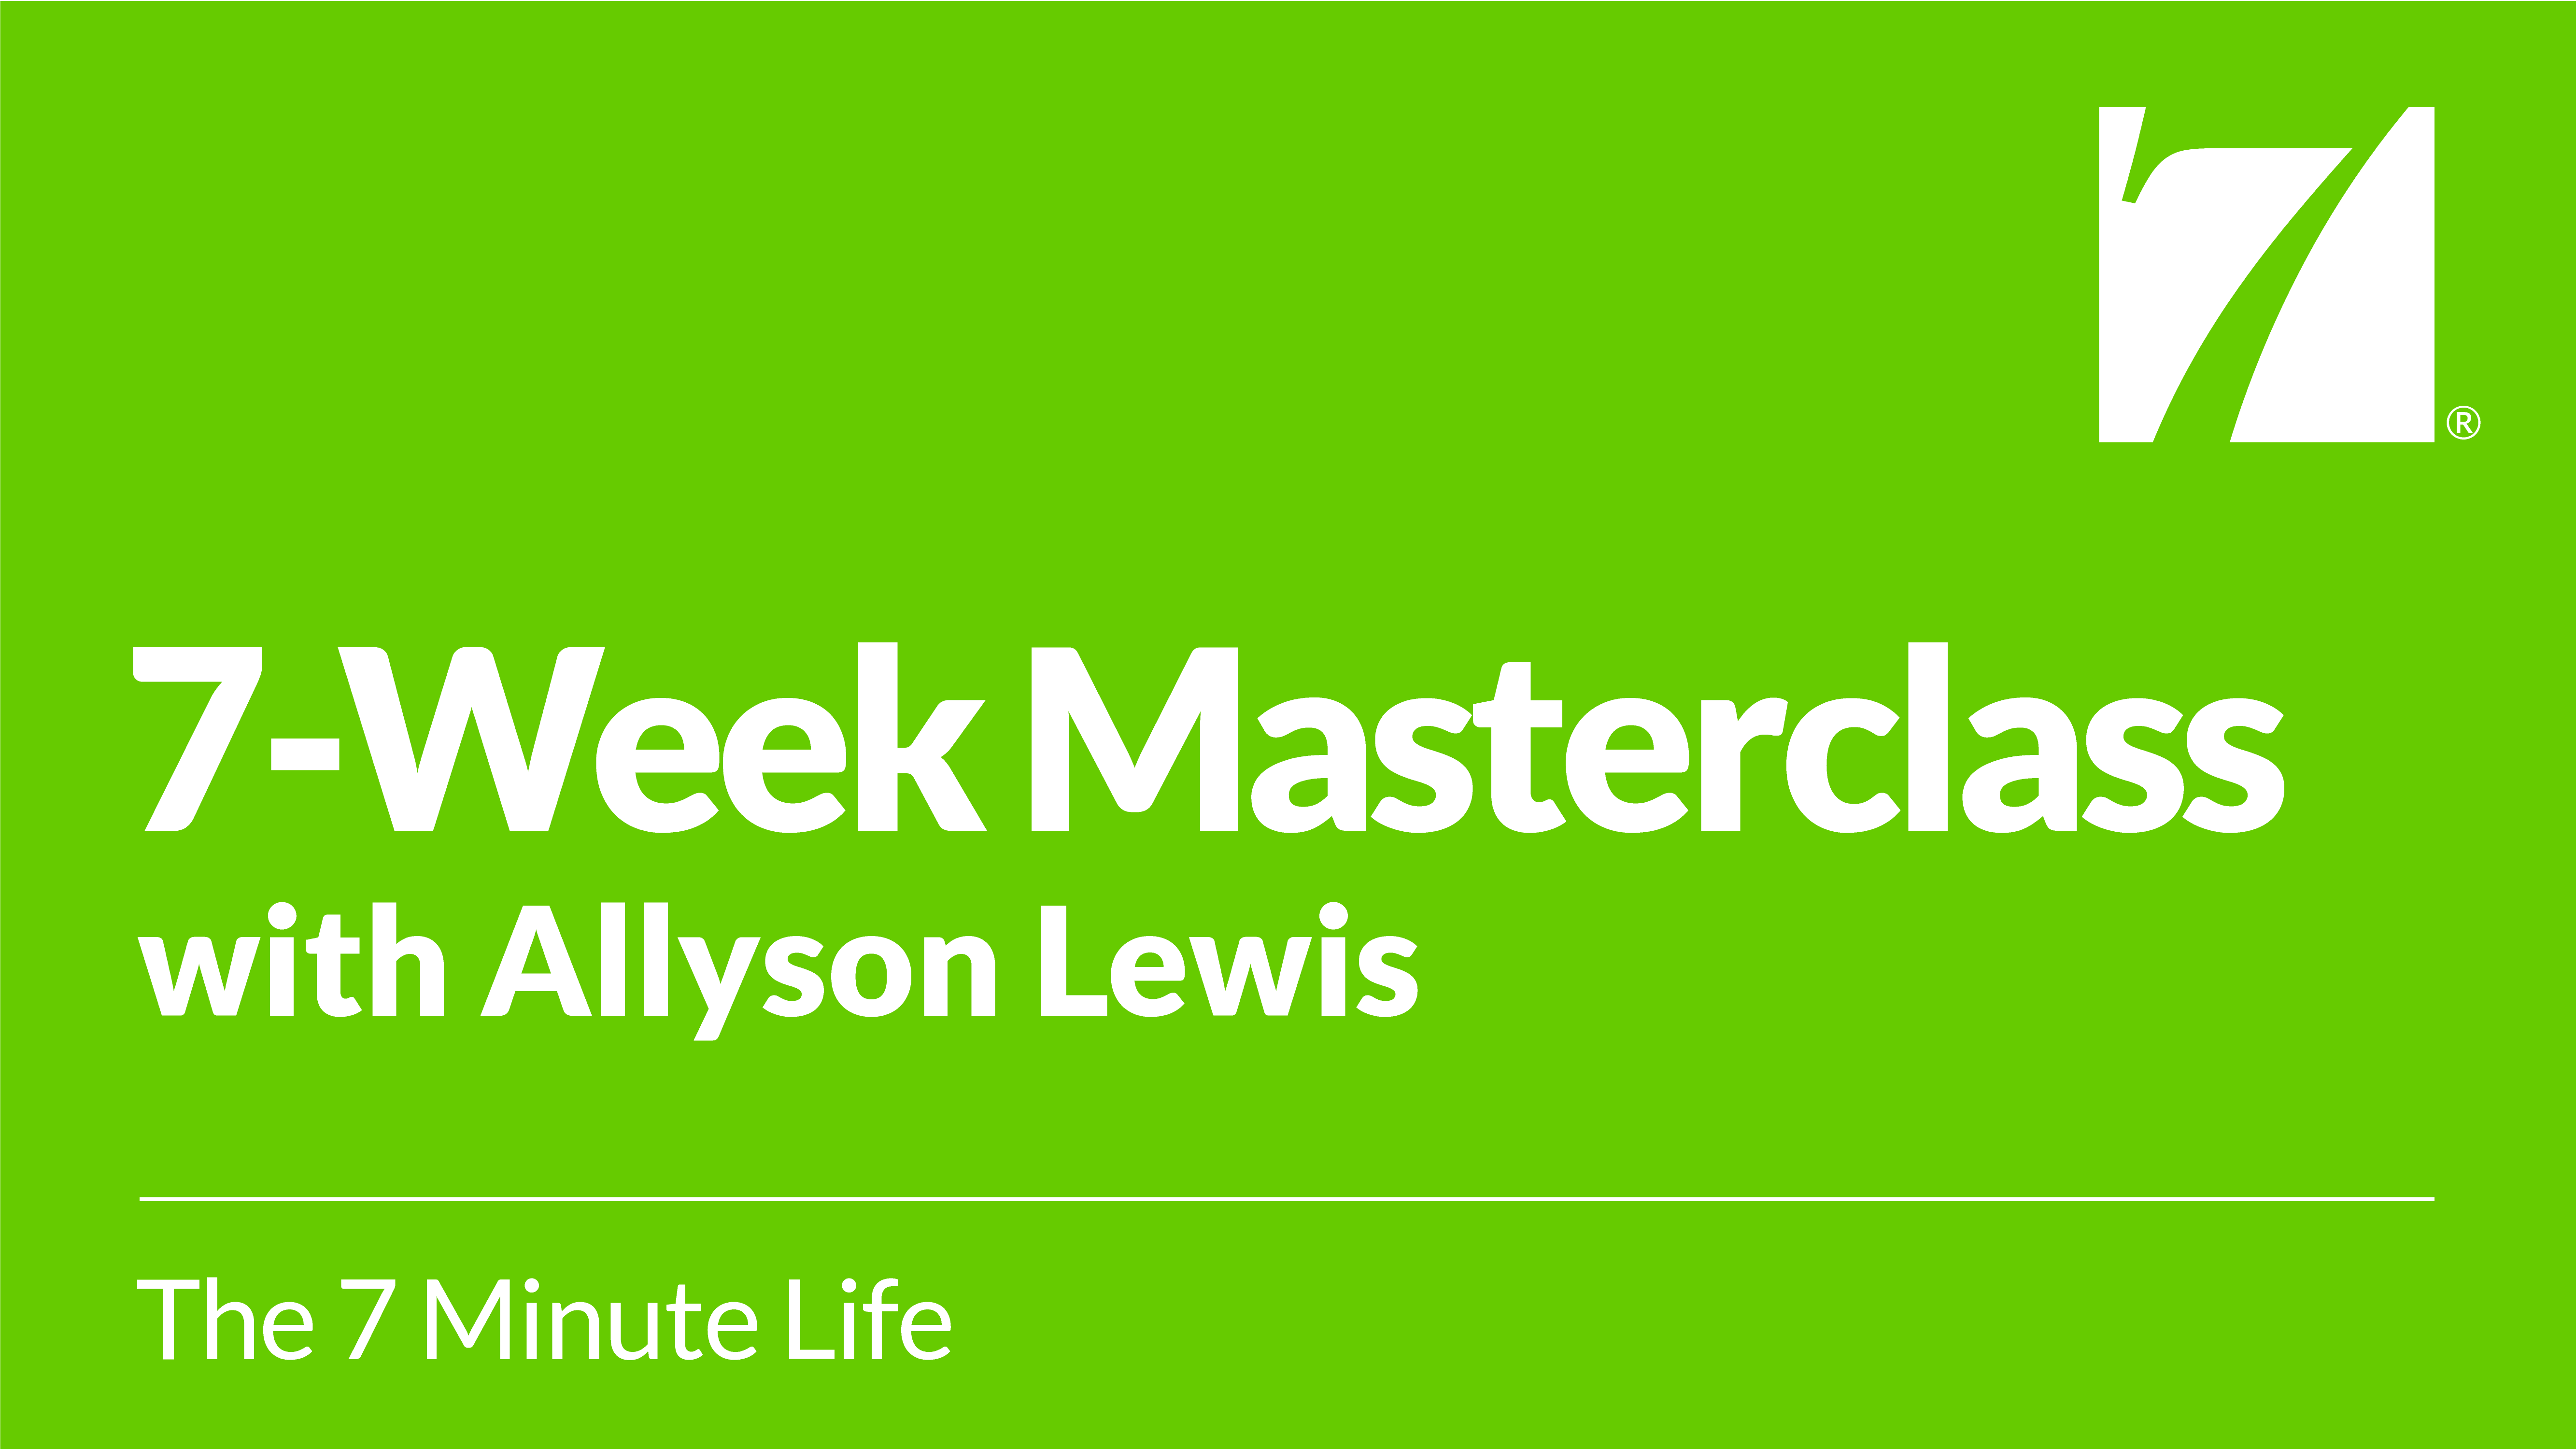 Allyson Lewis Masterclass